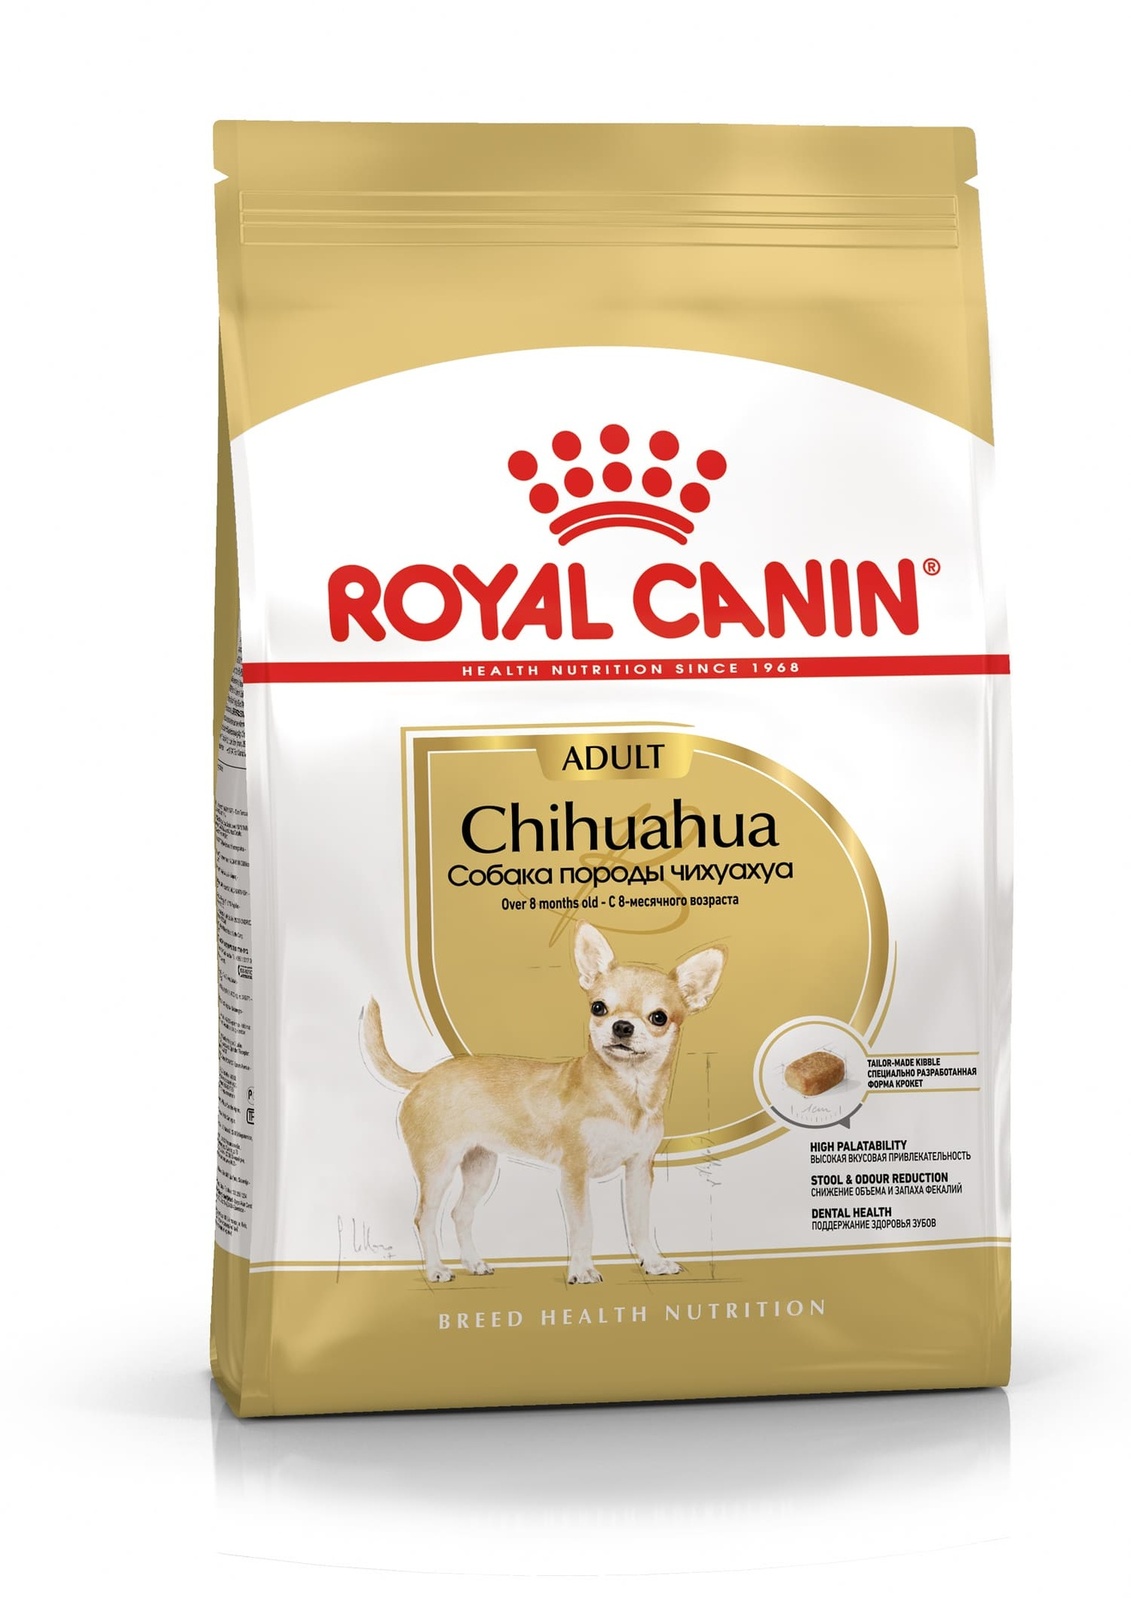 Royal Canin Royal Canin сухой корм для чихуахуа с 8 месяцев (3 кг) royal canin royal canin сухой корм для чихуахуа с 8 месяцев 3 кг